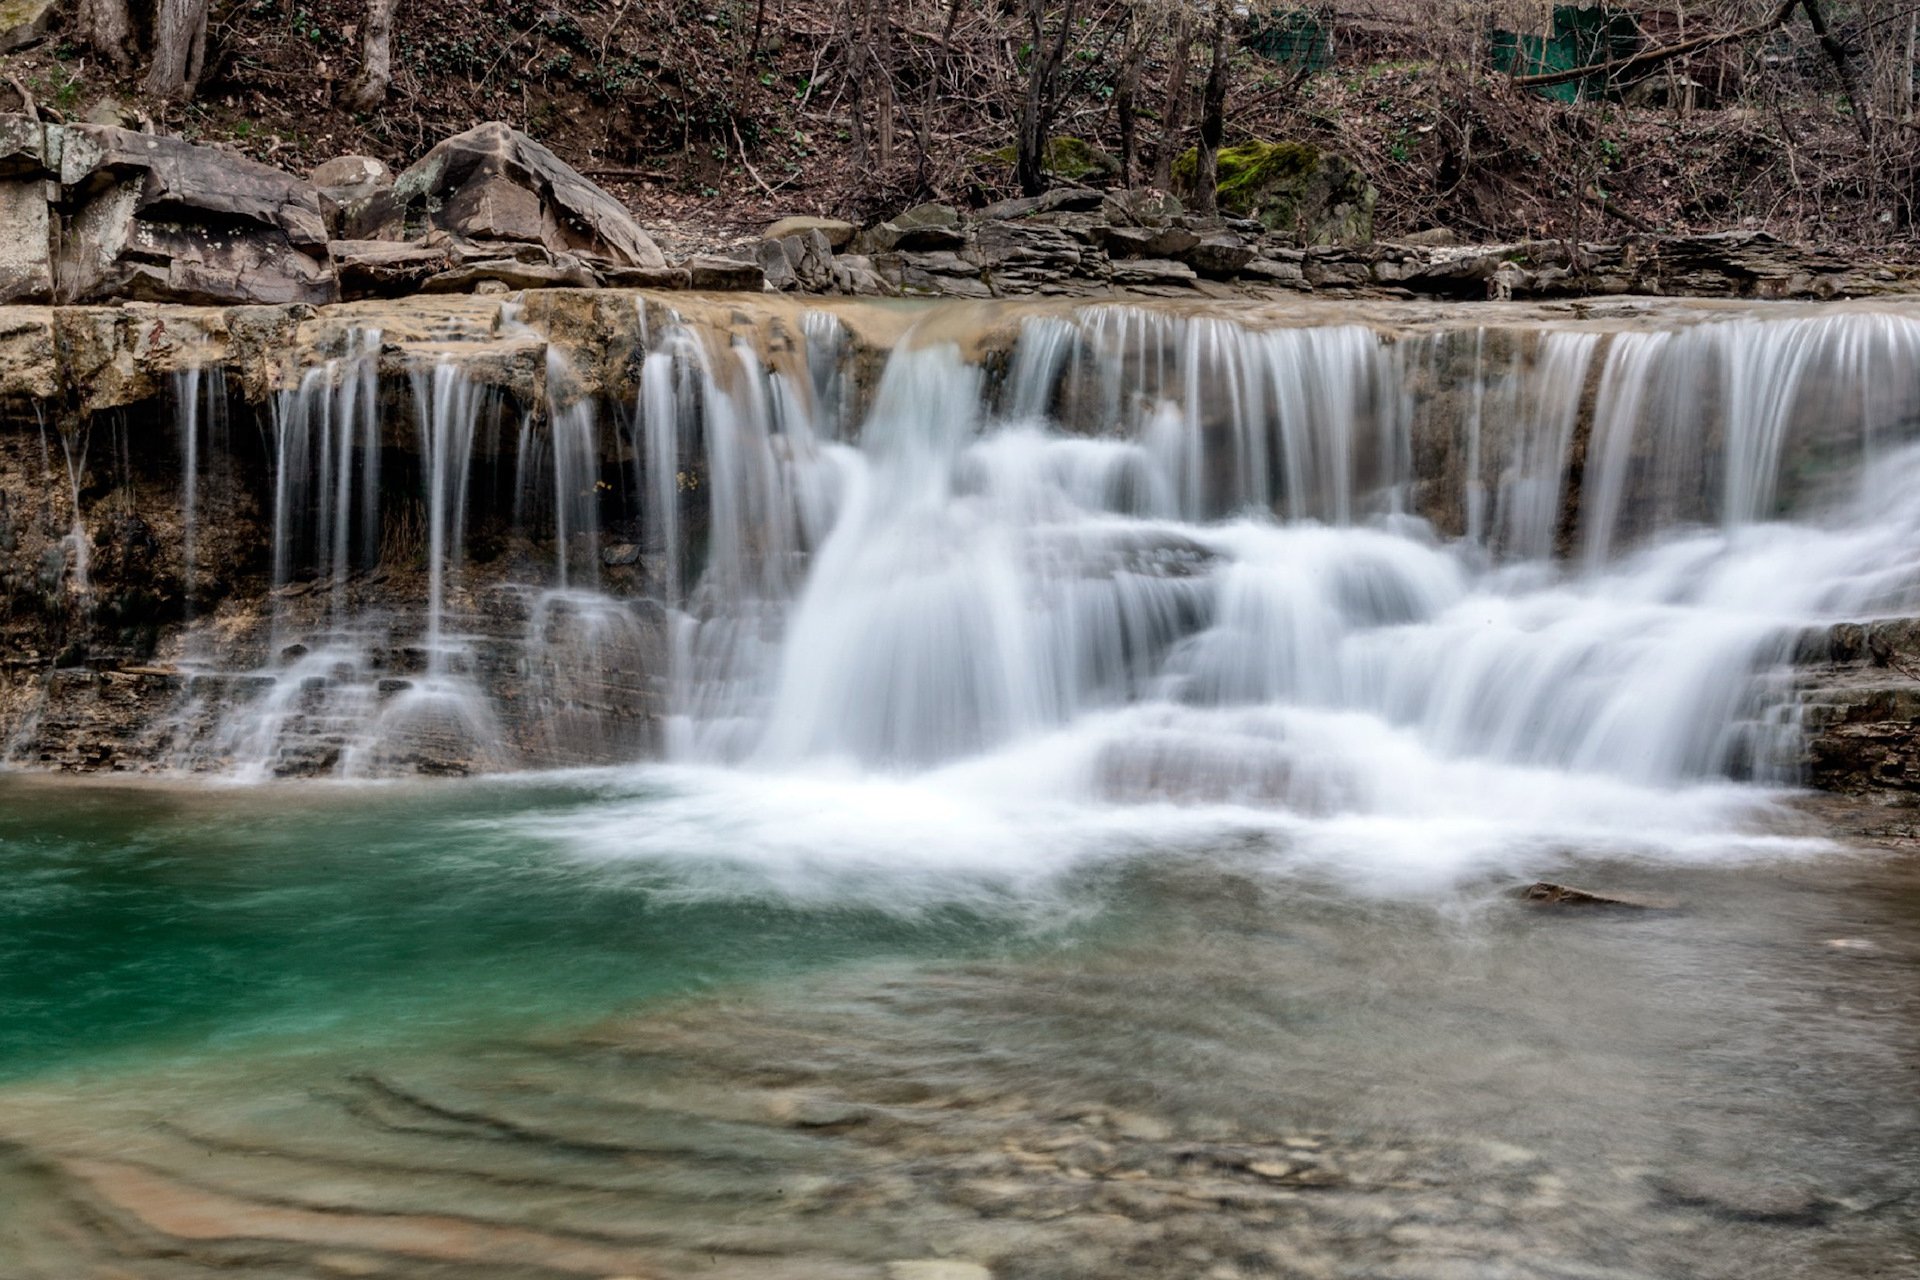 геленджик водопады на реке жане